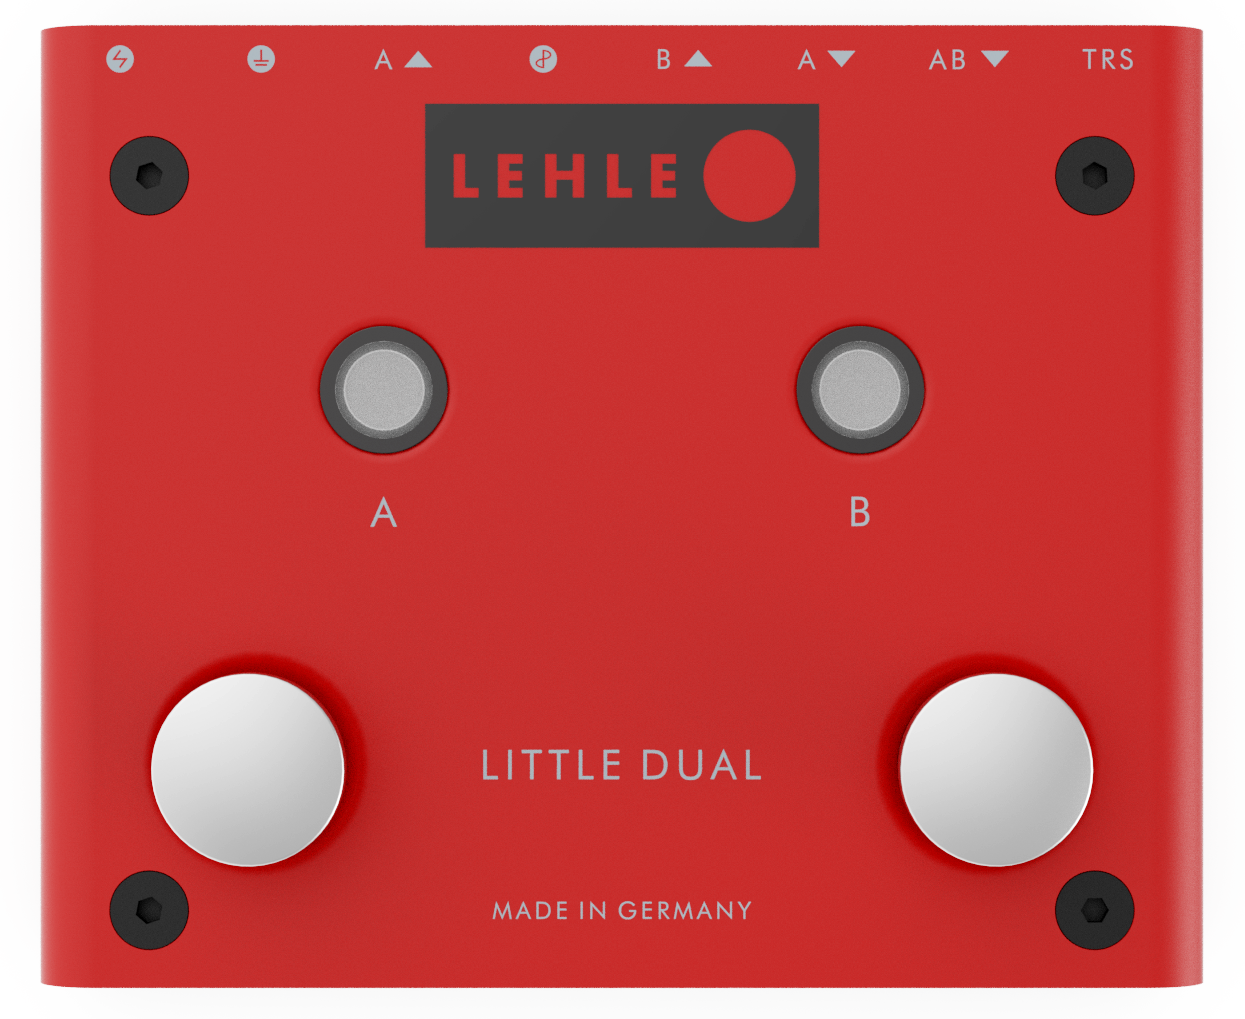 Lehle Little Dual II